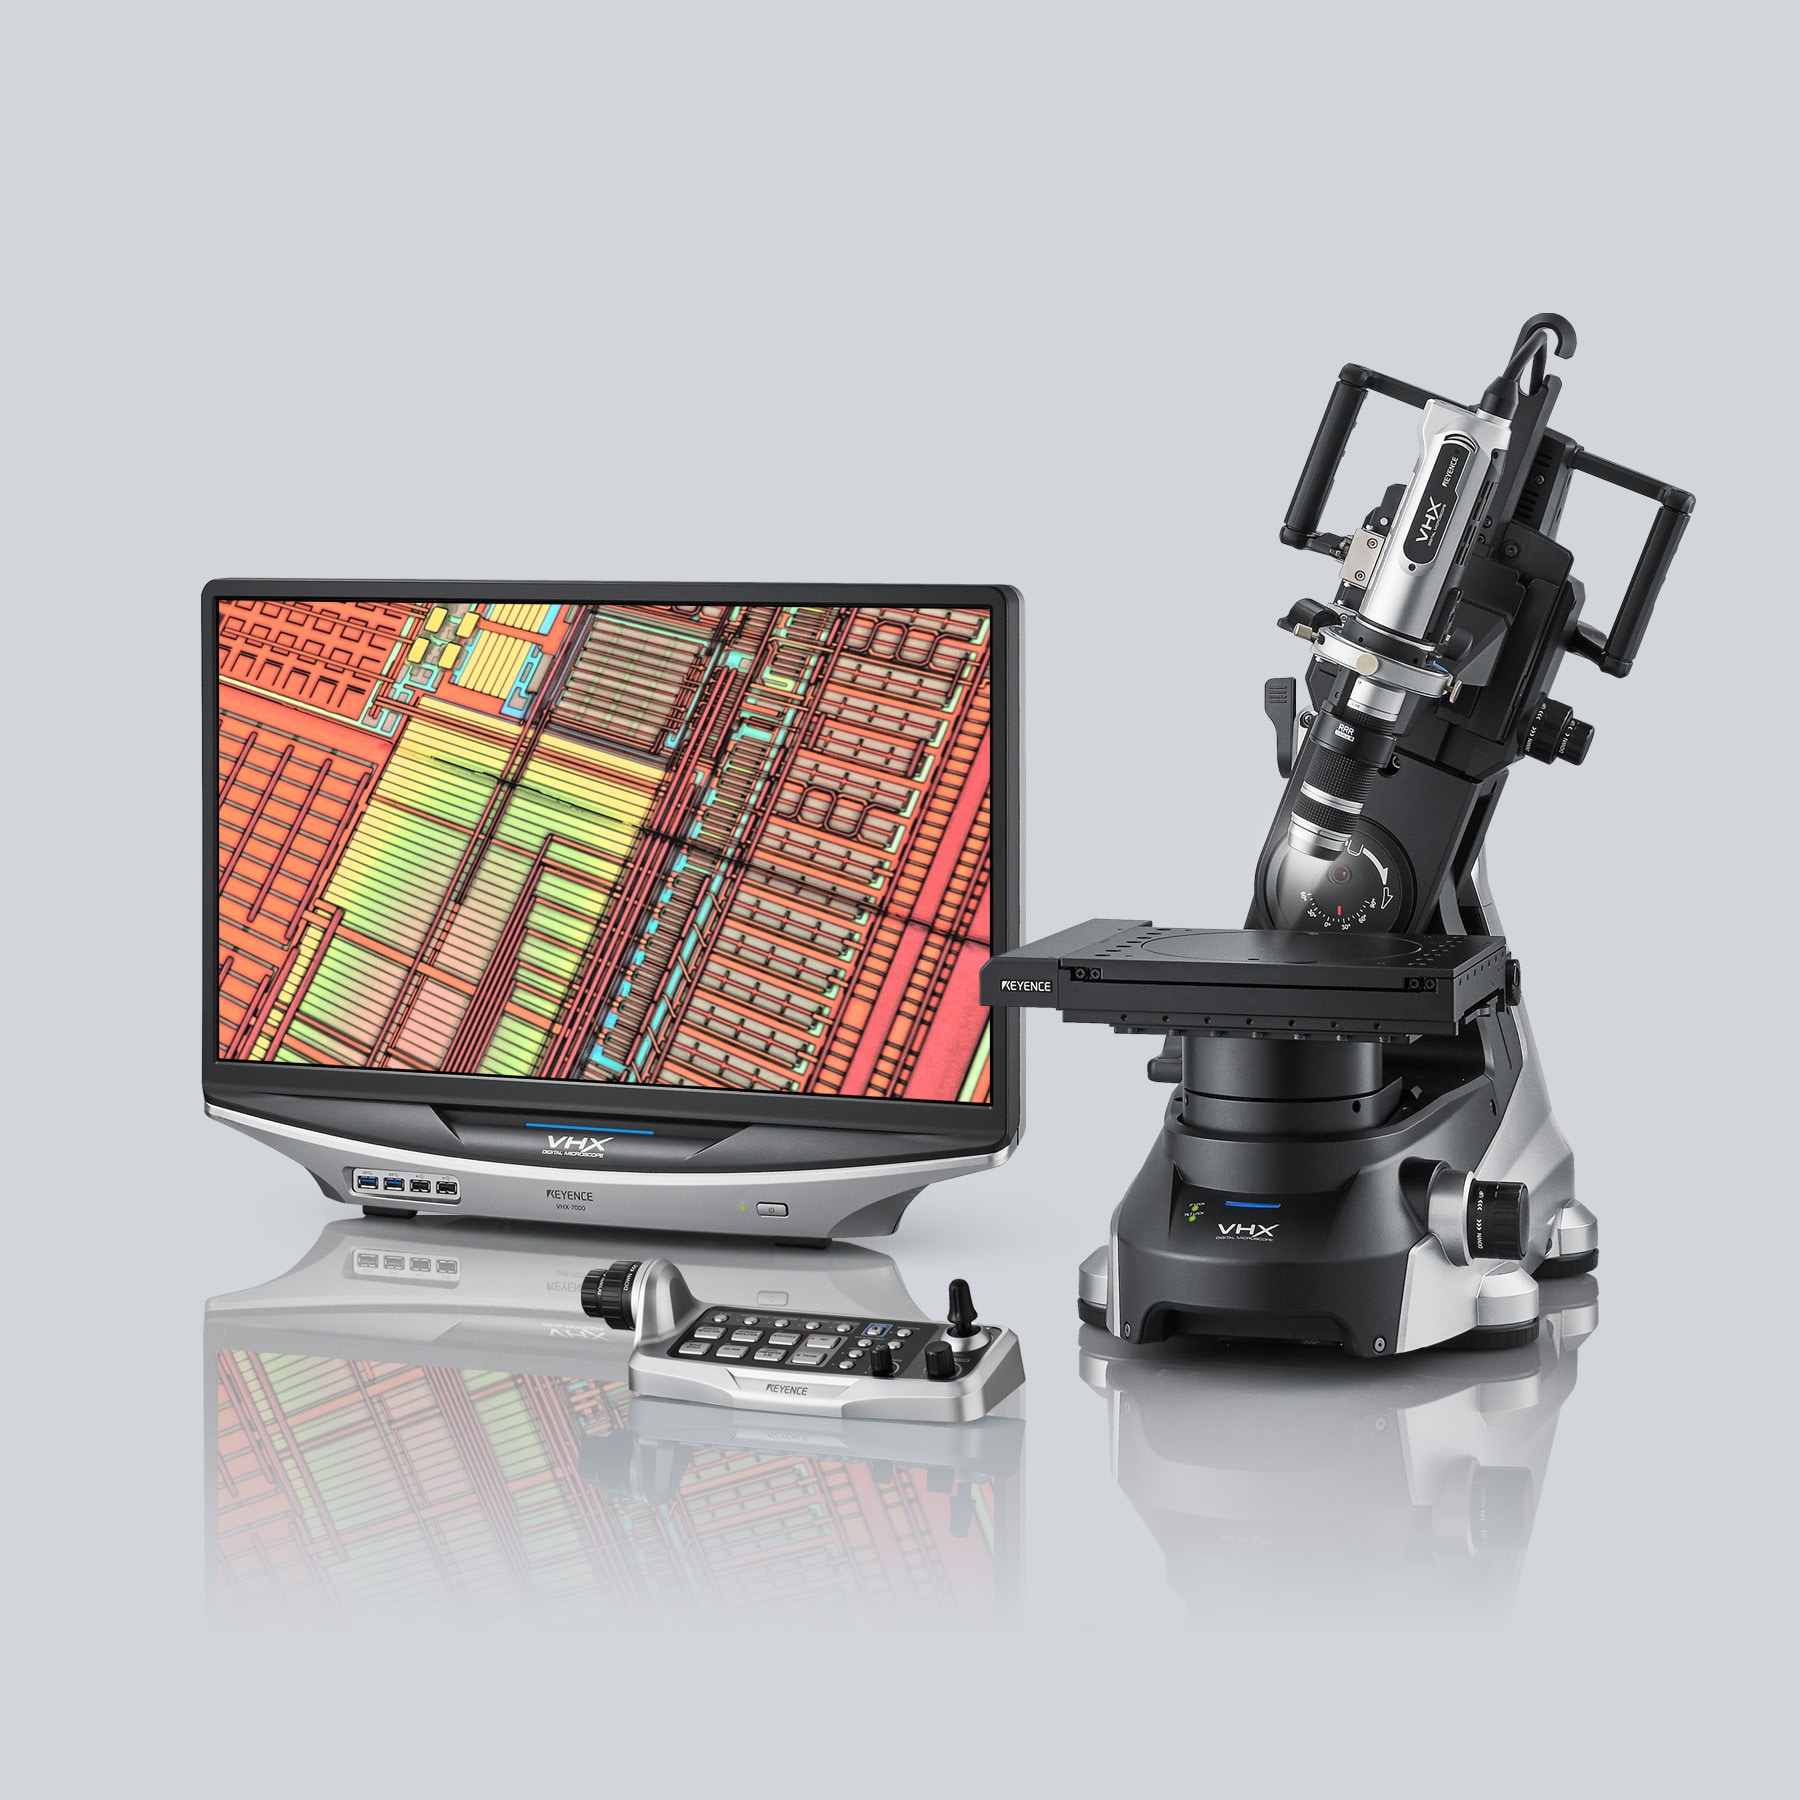 Mic-UK: Microscope measuring